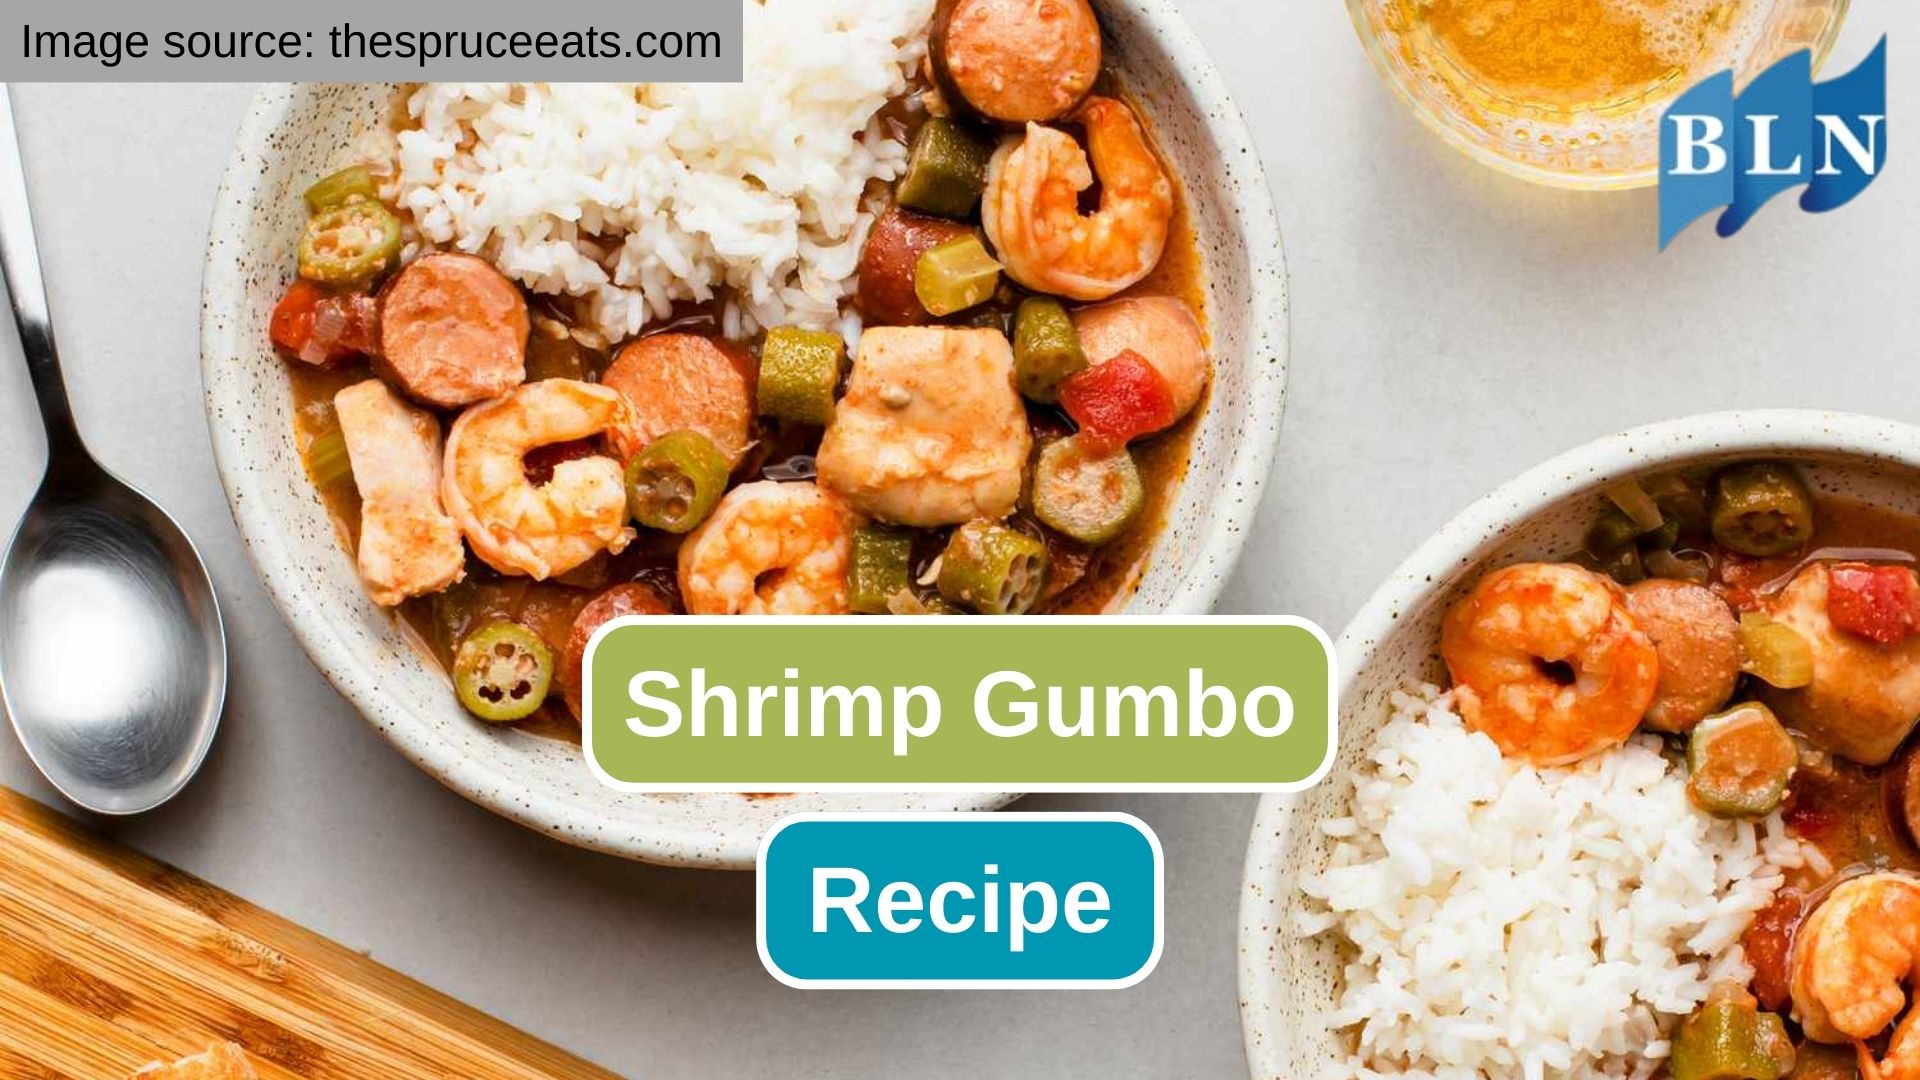 Here is How to Make Homemade Shrimp Gumbo